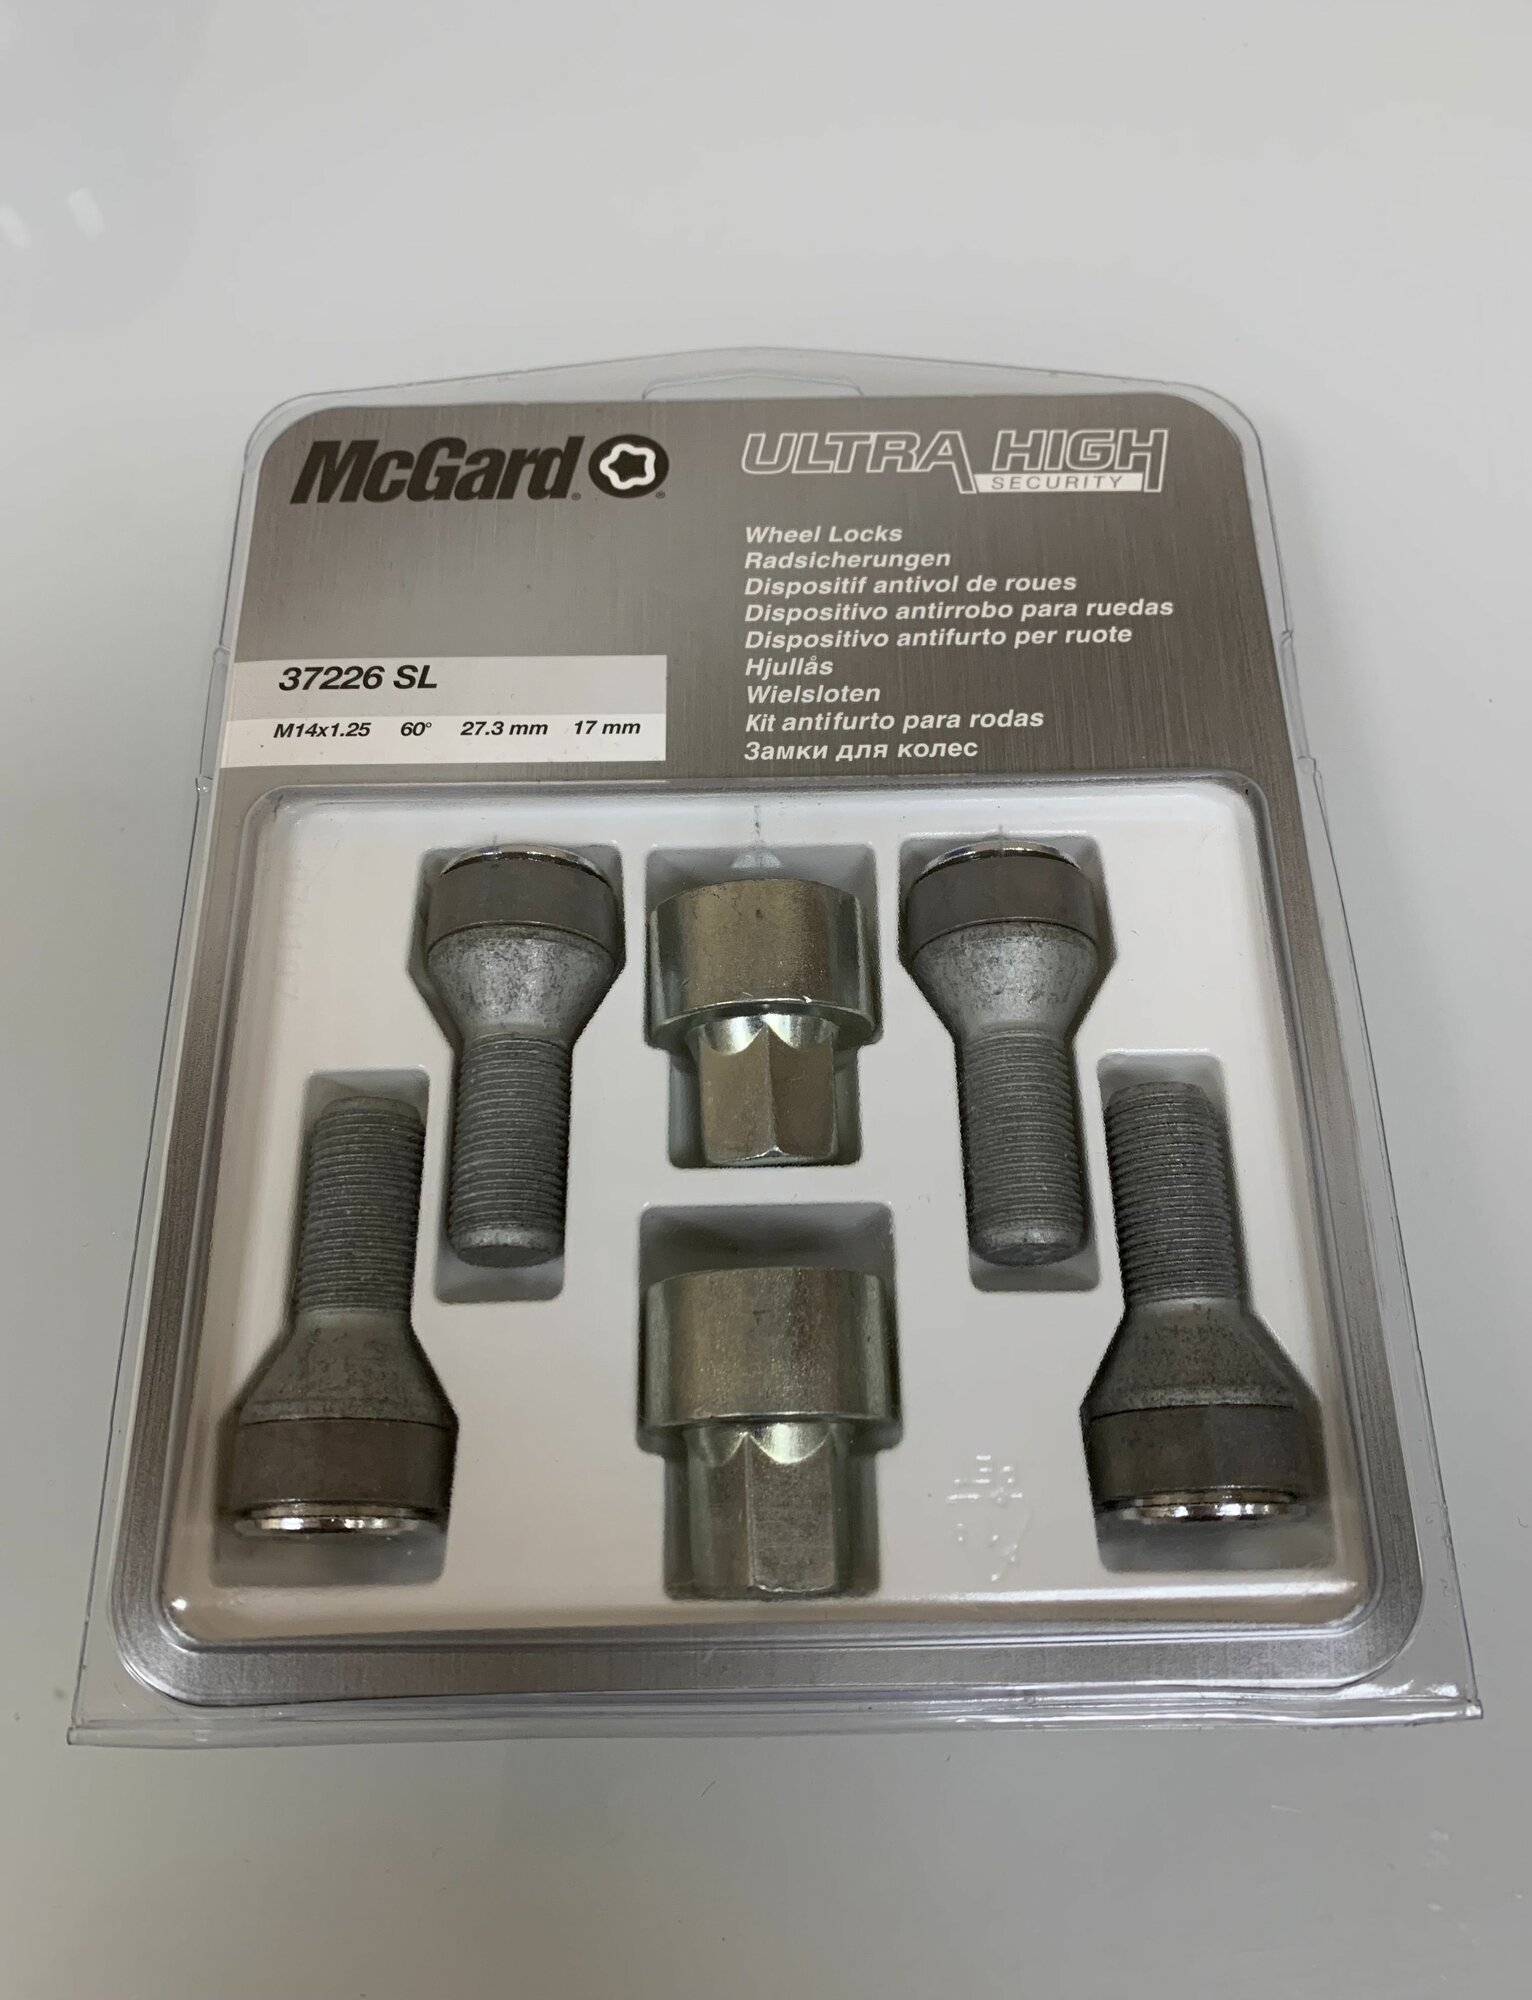 Болты-секретки McGard 37226SL M14x1.25 L27.3mm S17mm два ключа.